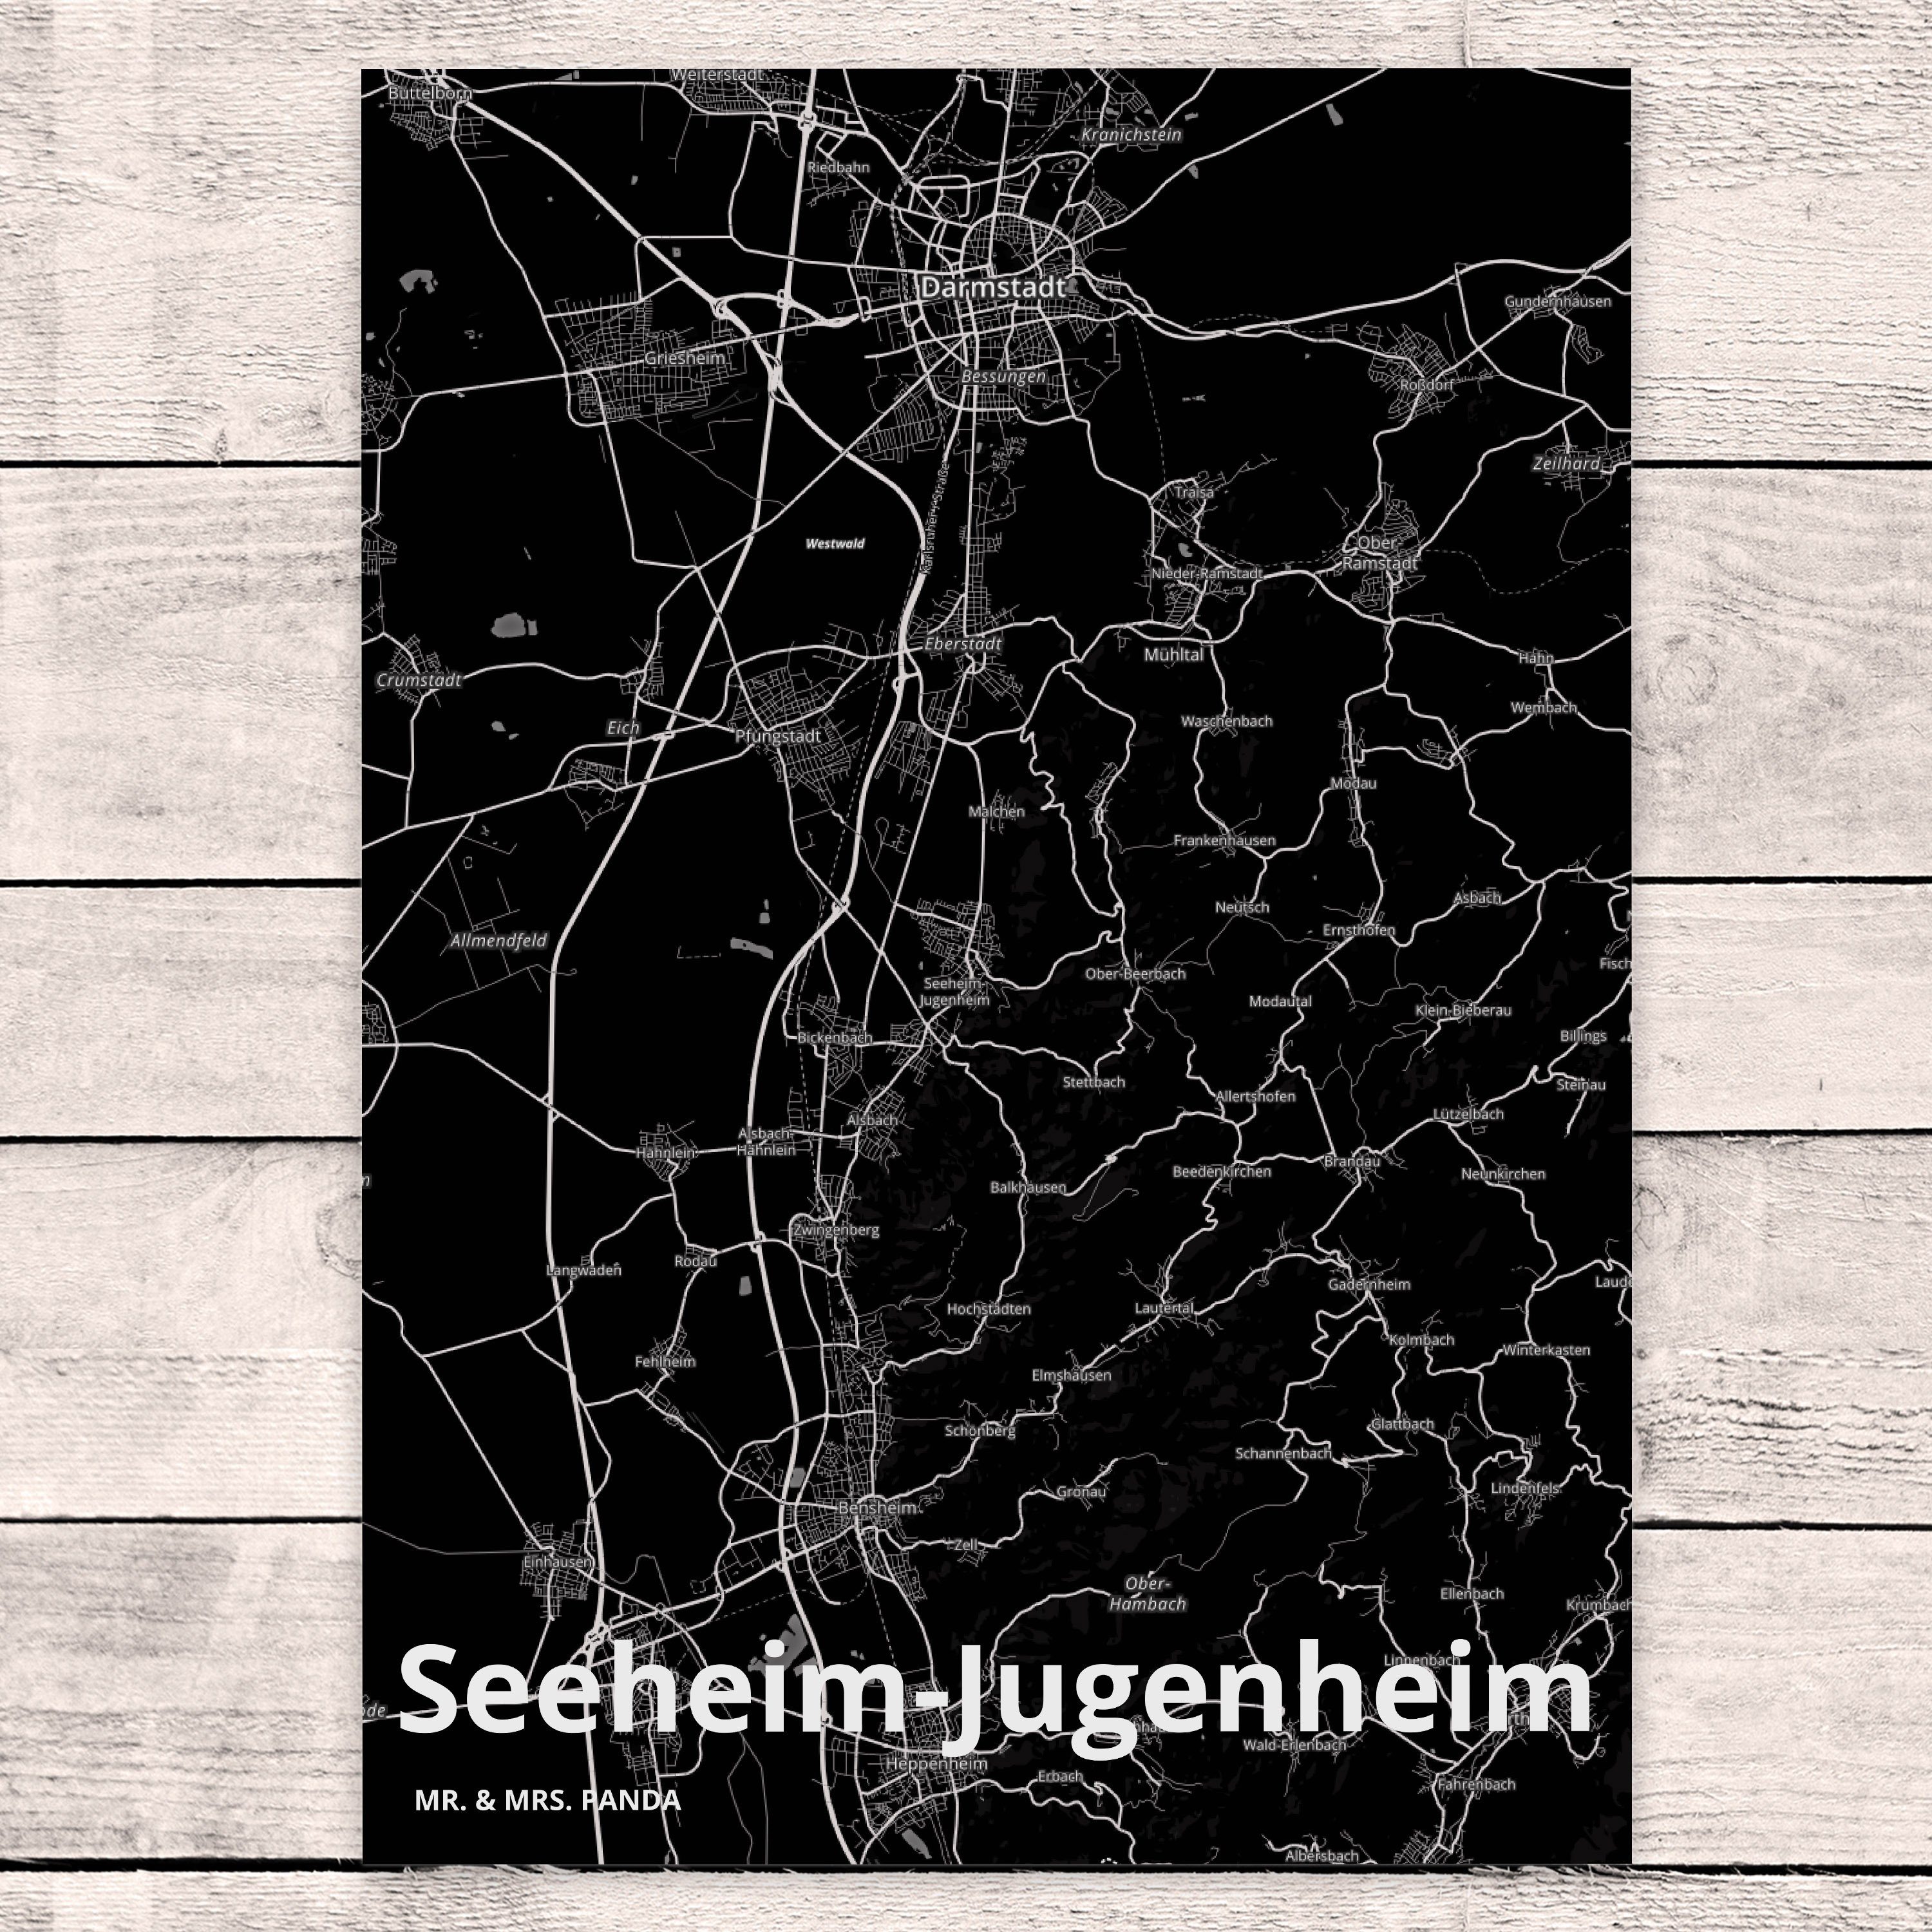 Mr. - Städte, & Seeheim-Jugenheim Einladung, Dankeskarte, O Postkarte Panda Mrs. Dorf, Geschenk,